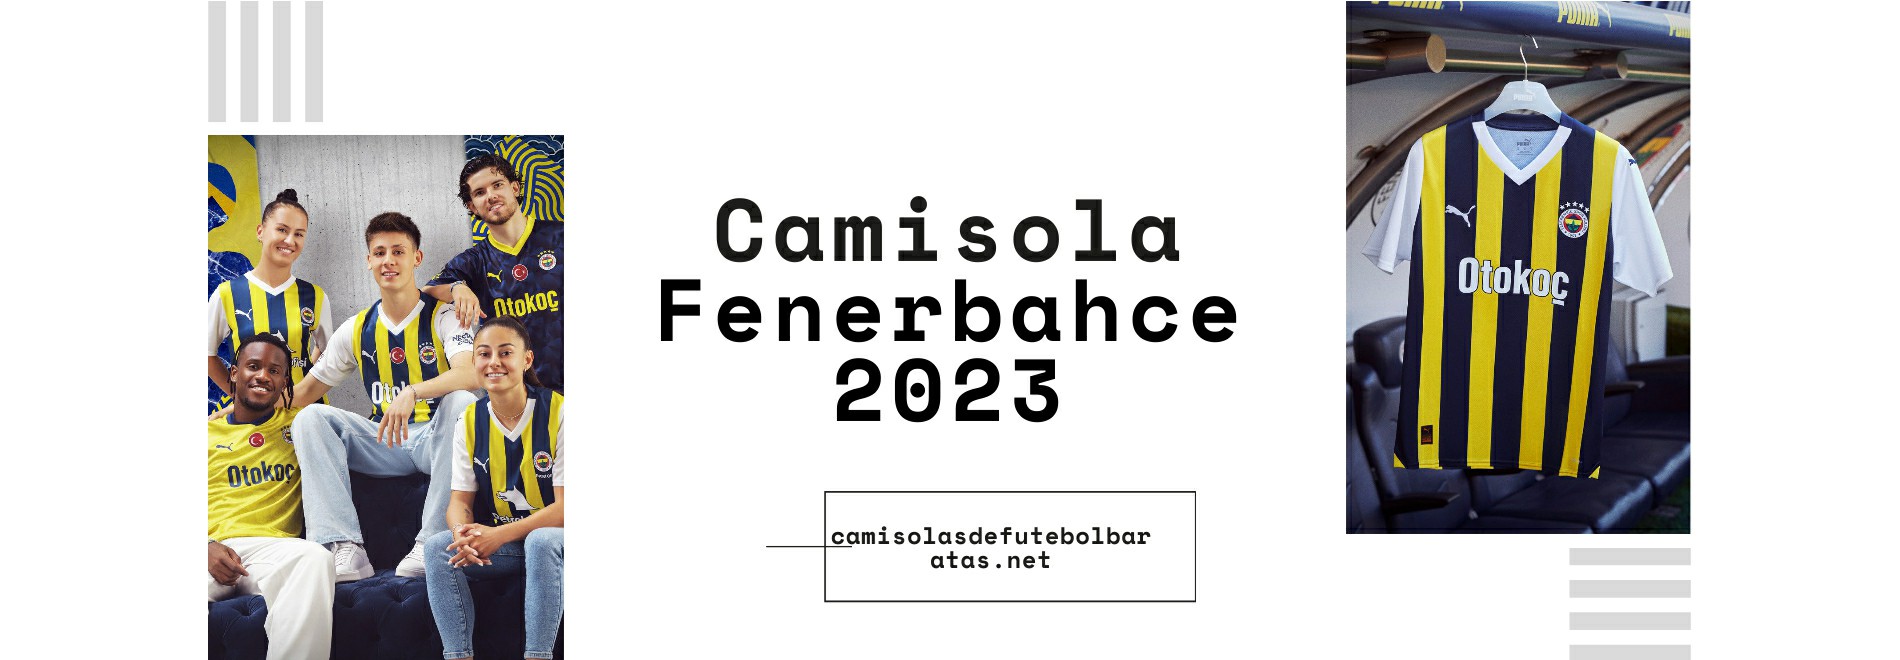 Camisola Fenerbahce 2023-2024